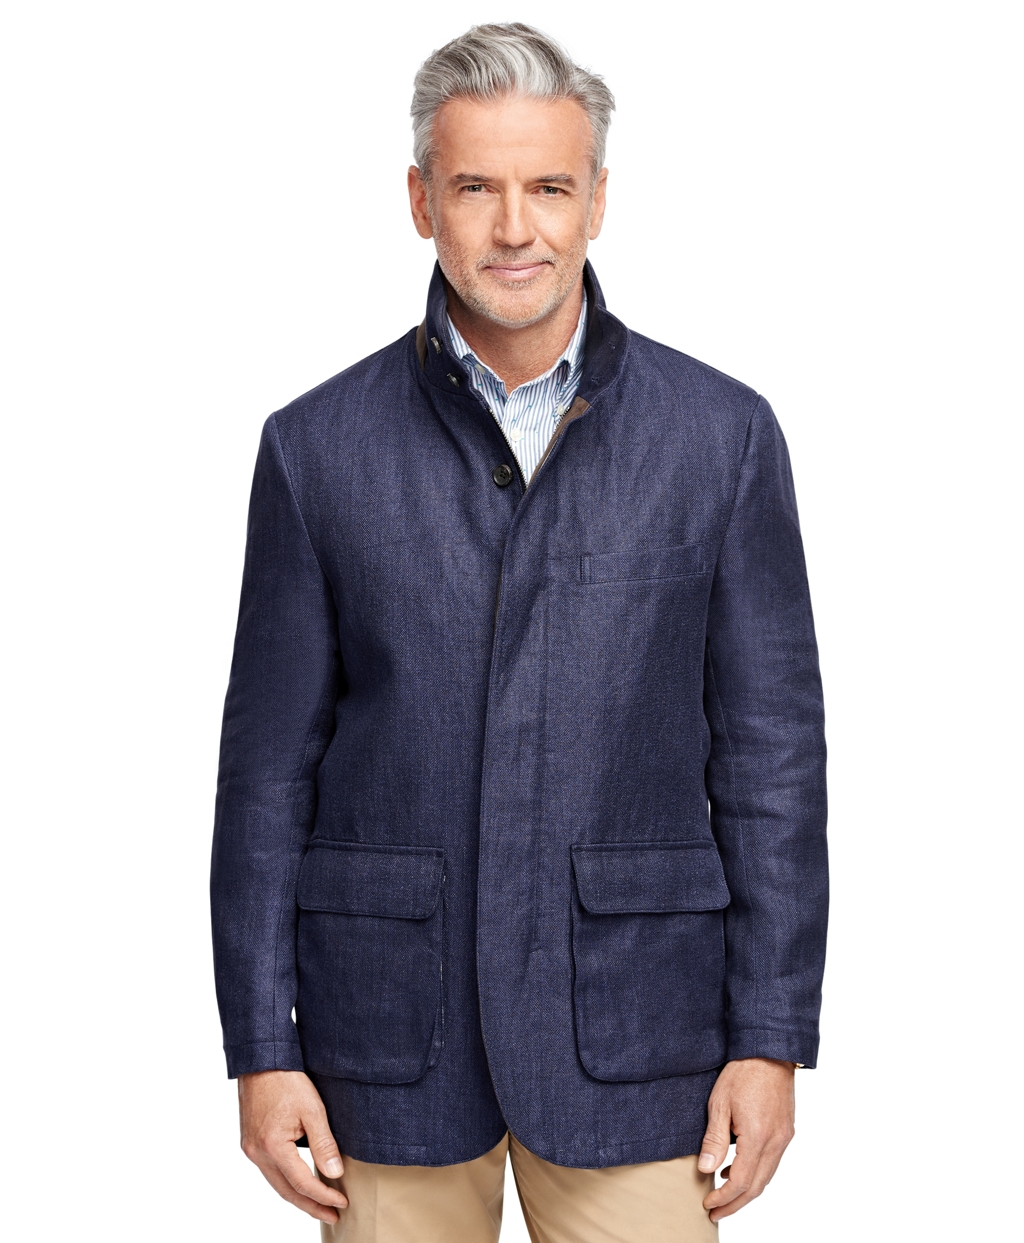 Lyst - Brooks Brothers Linen Hybrid Jacket in Blue for Men